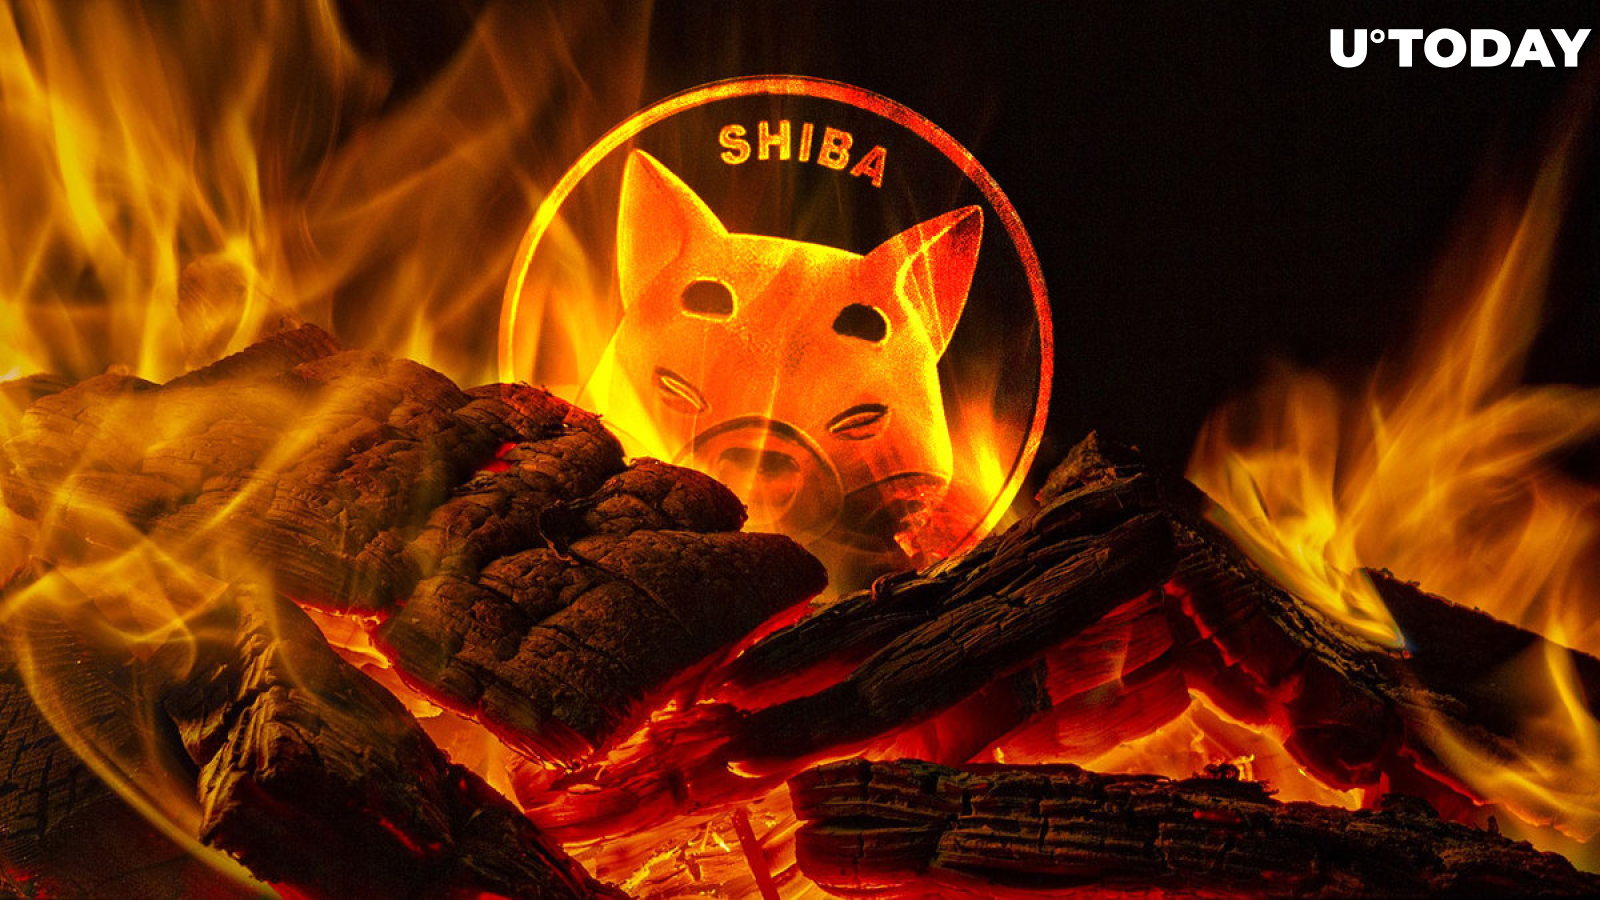 Weekly SHIB Burn Rate 76% Down Despite Great Shibarium News